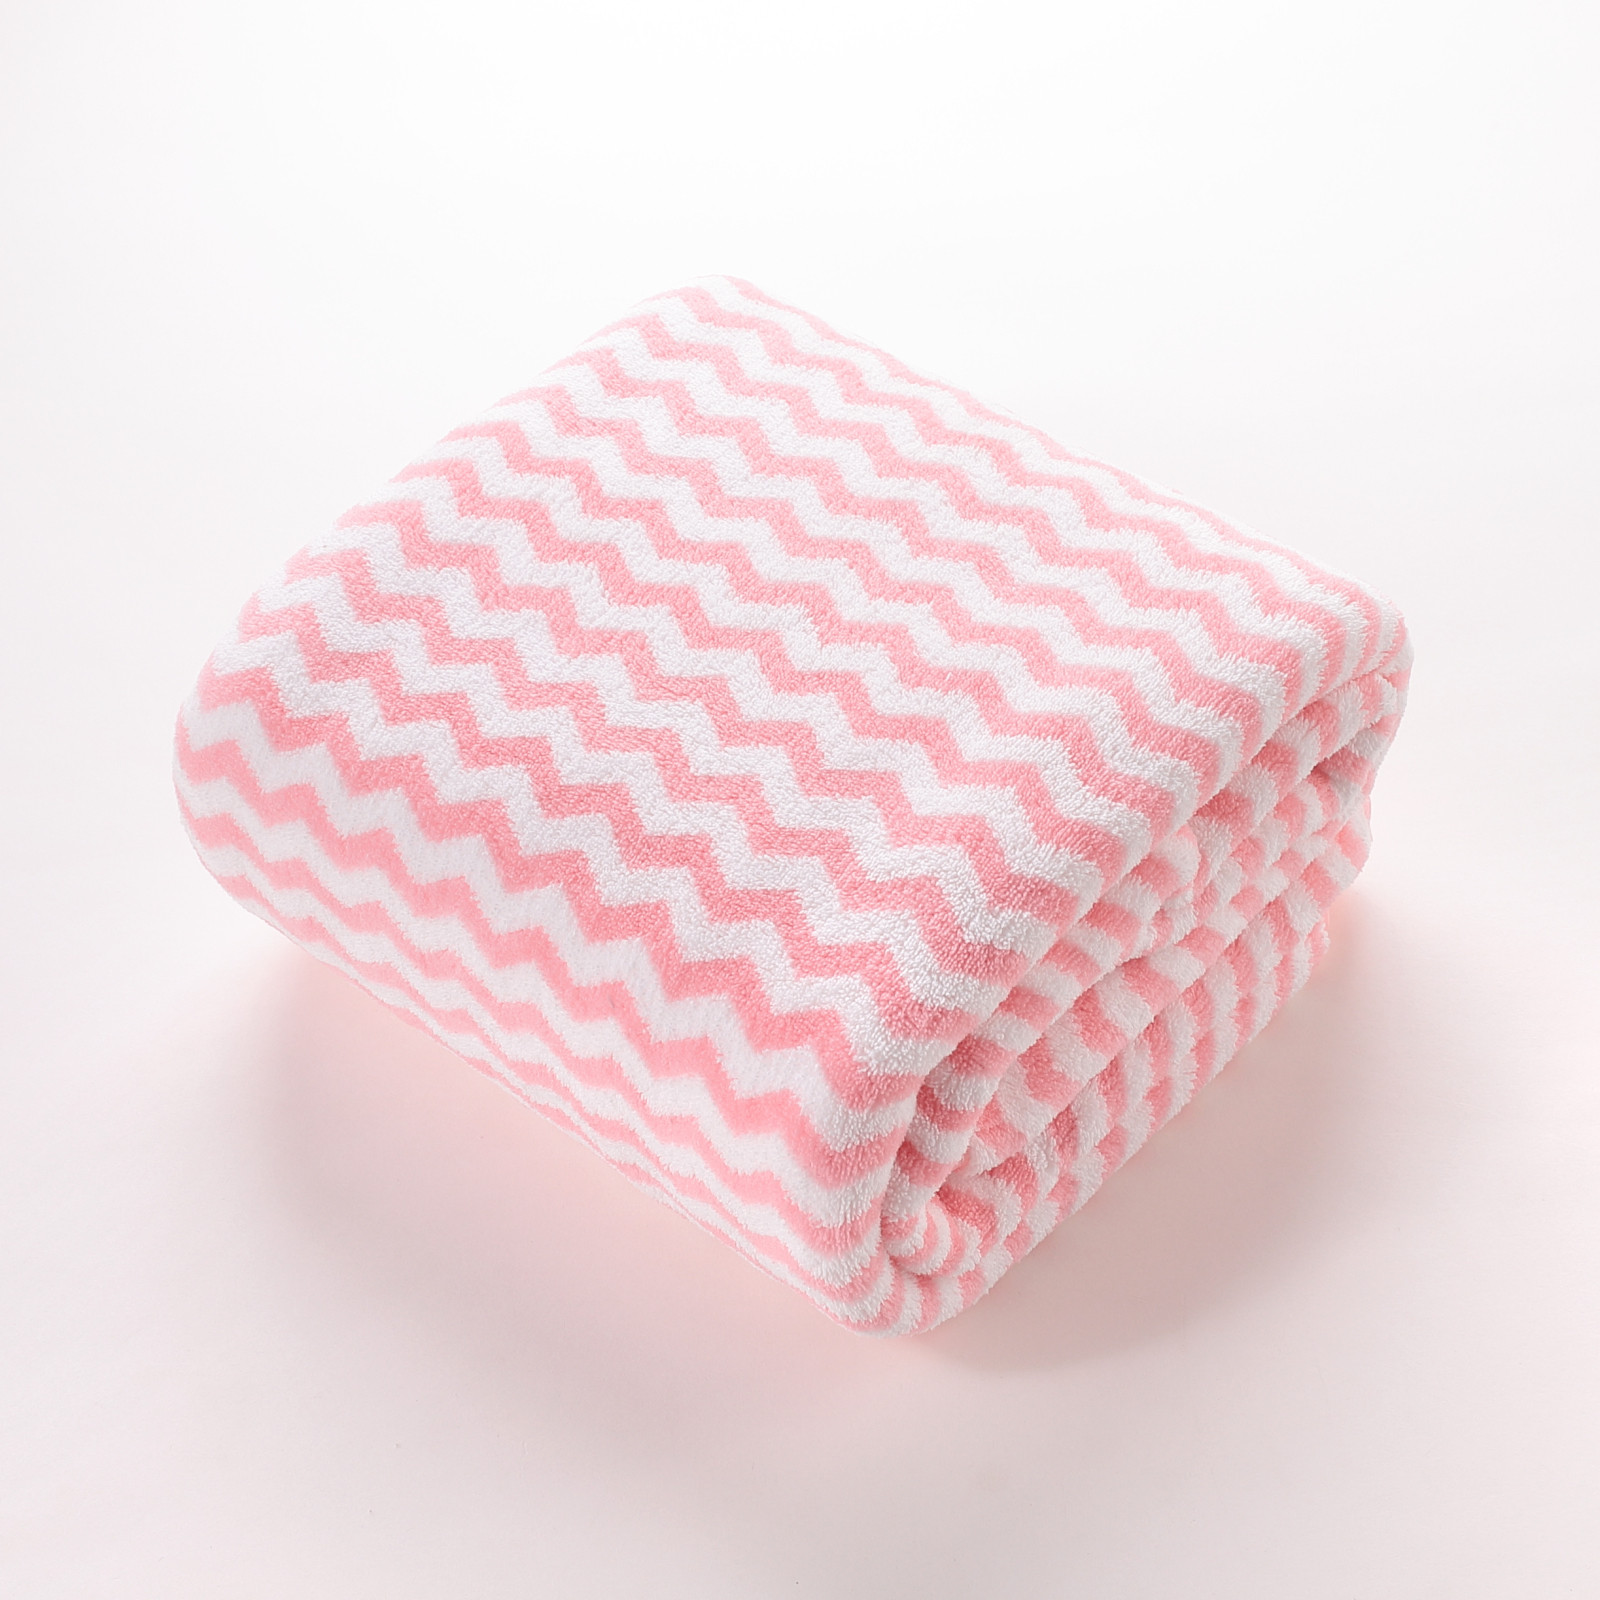 Kuber Industries Bath Towel For Men, Women|280 GSM|Extra Soft & Fade Resistant|Polyester Towels For Bath|Stripes Design|Bathing Towel, Bath Sheet (Pink)